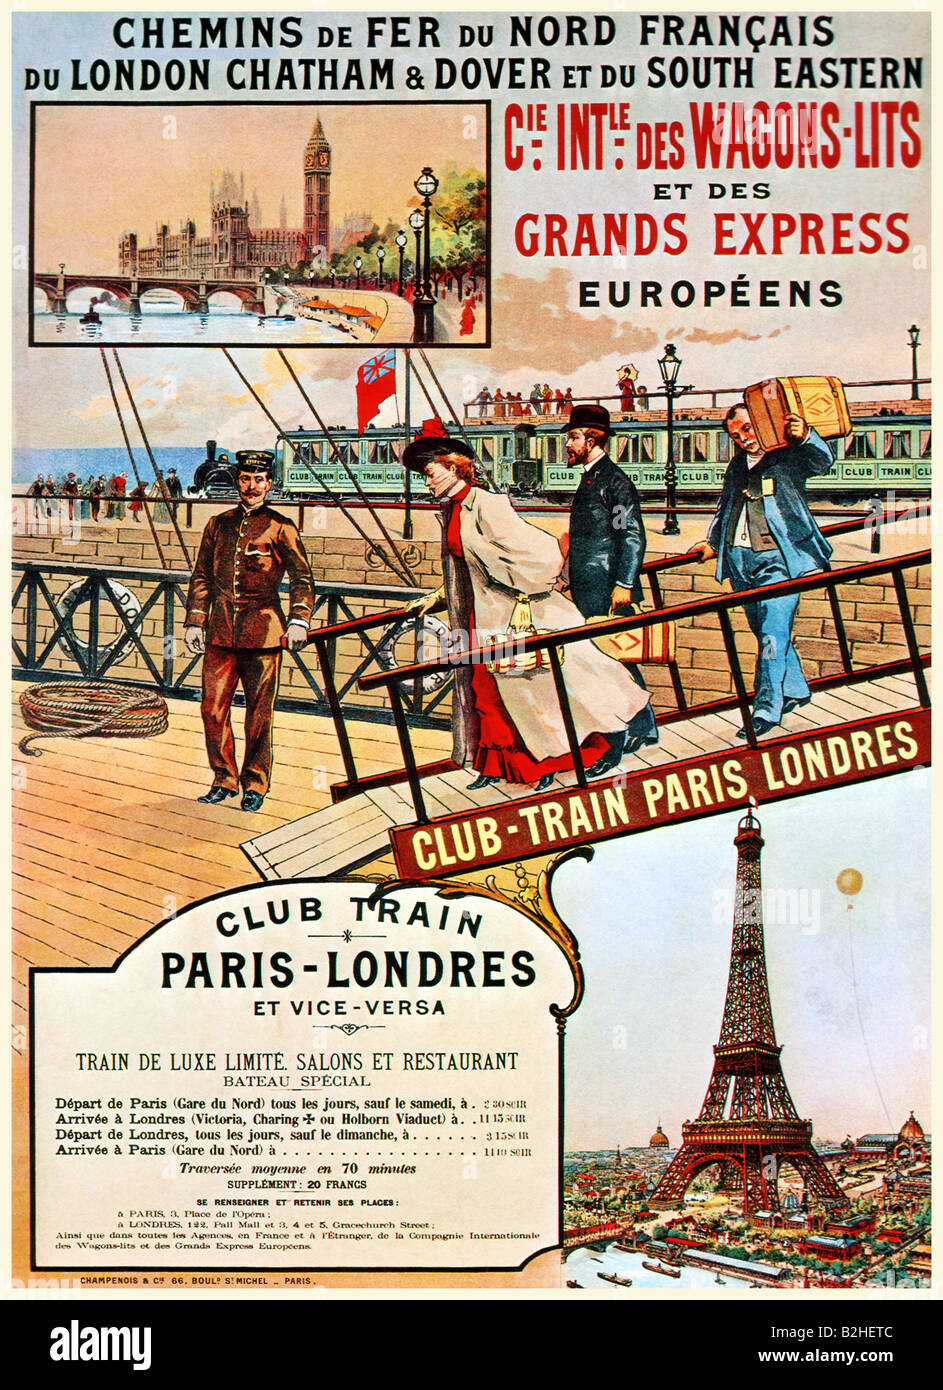 Throwback Travel Paris Poster - Wonderful 11 X 16 French Fine Art & Design  Print